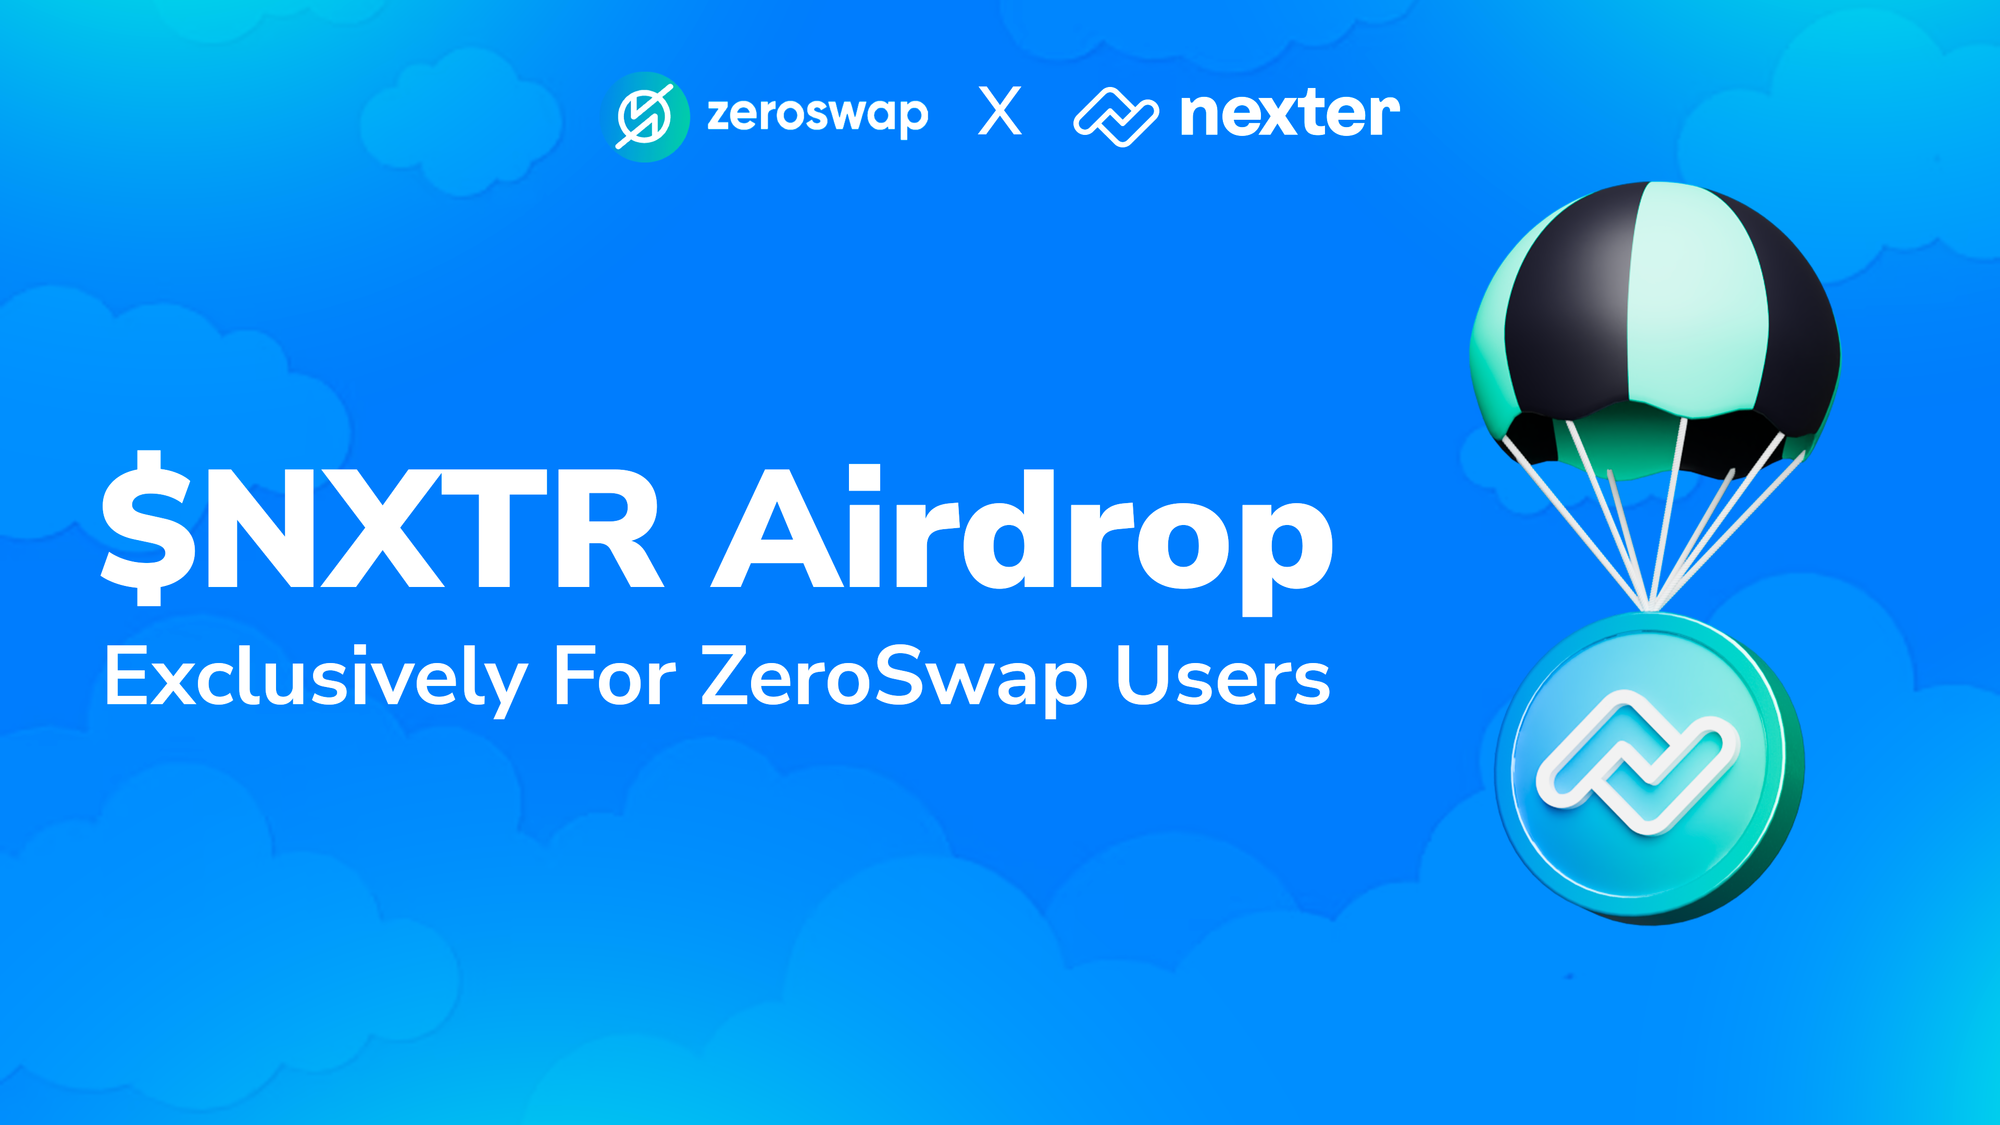 ZeroSwap Announces $NXTR Airdrop with Nexter’s Prediction Markets